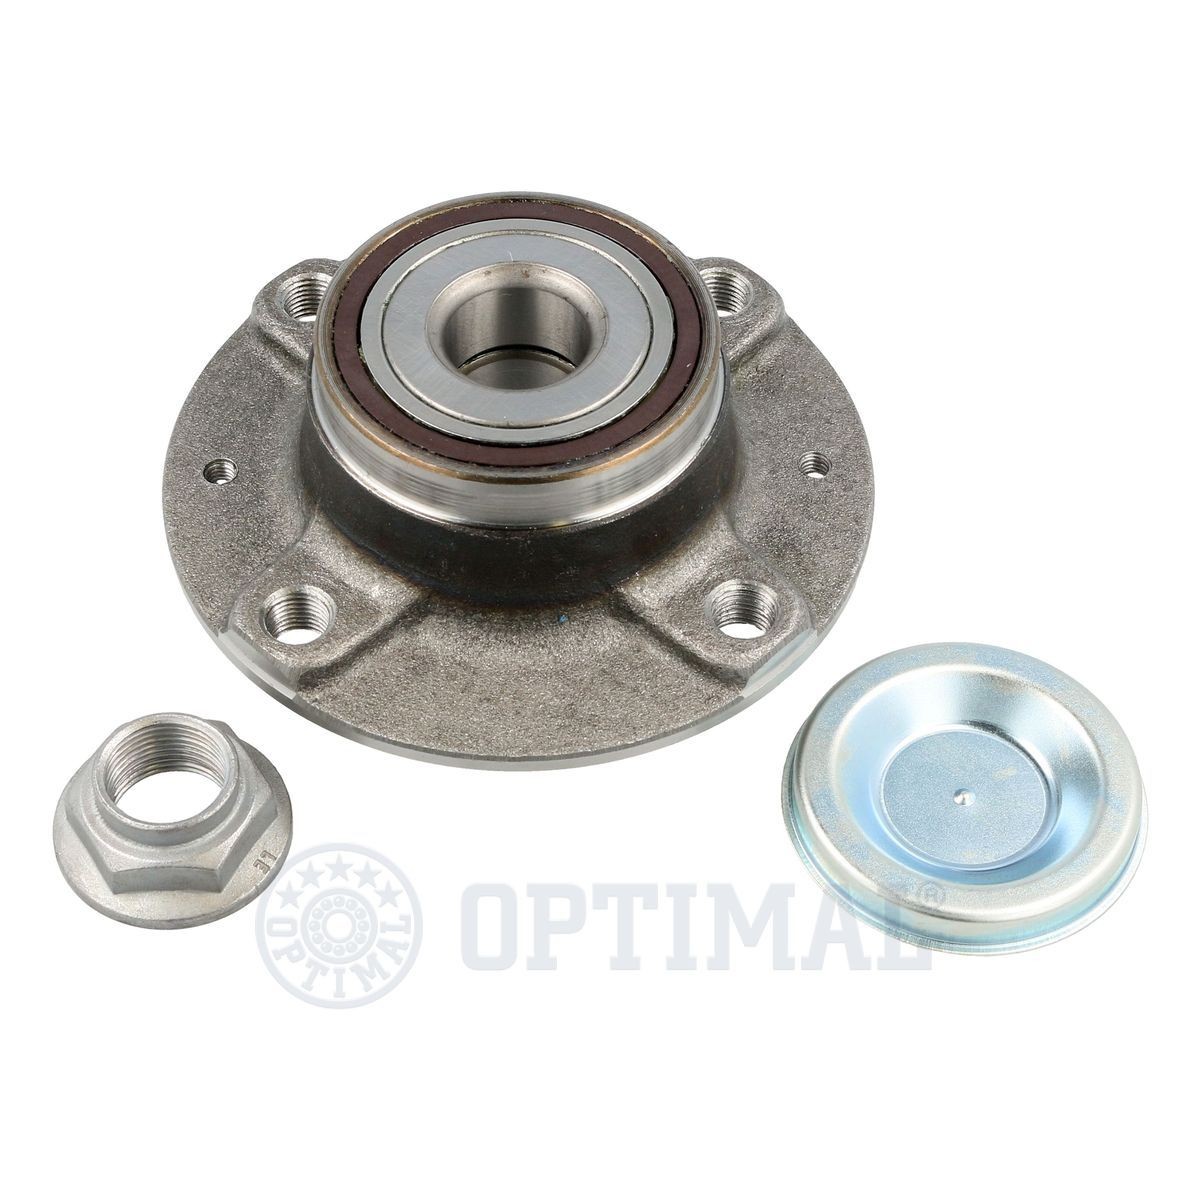 OPTIMAL 602956 Wheel bearing kit with integrated magnetic sensor ring, 129 mm